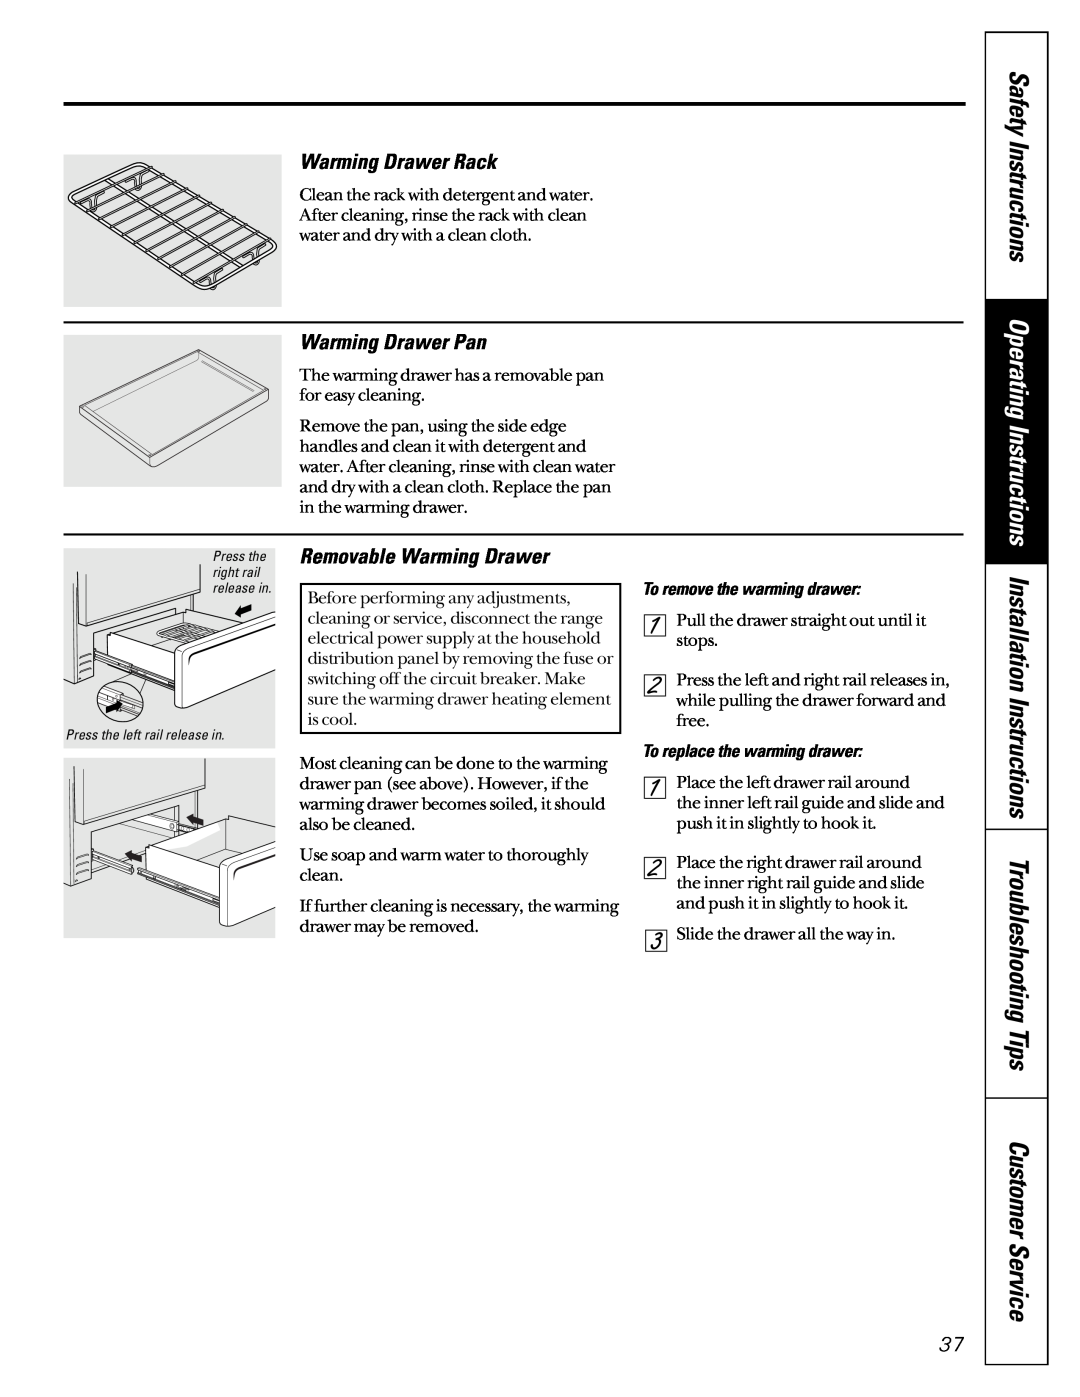 GE JCB910 Safety Instructions Operating Instructions, Warming Drawer Rack, Warming Drawer Pan, Removable Warming Drawer 